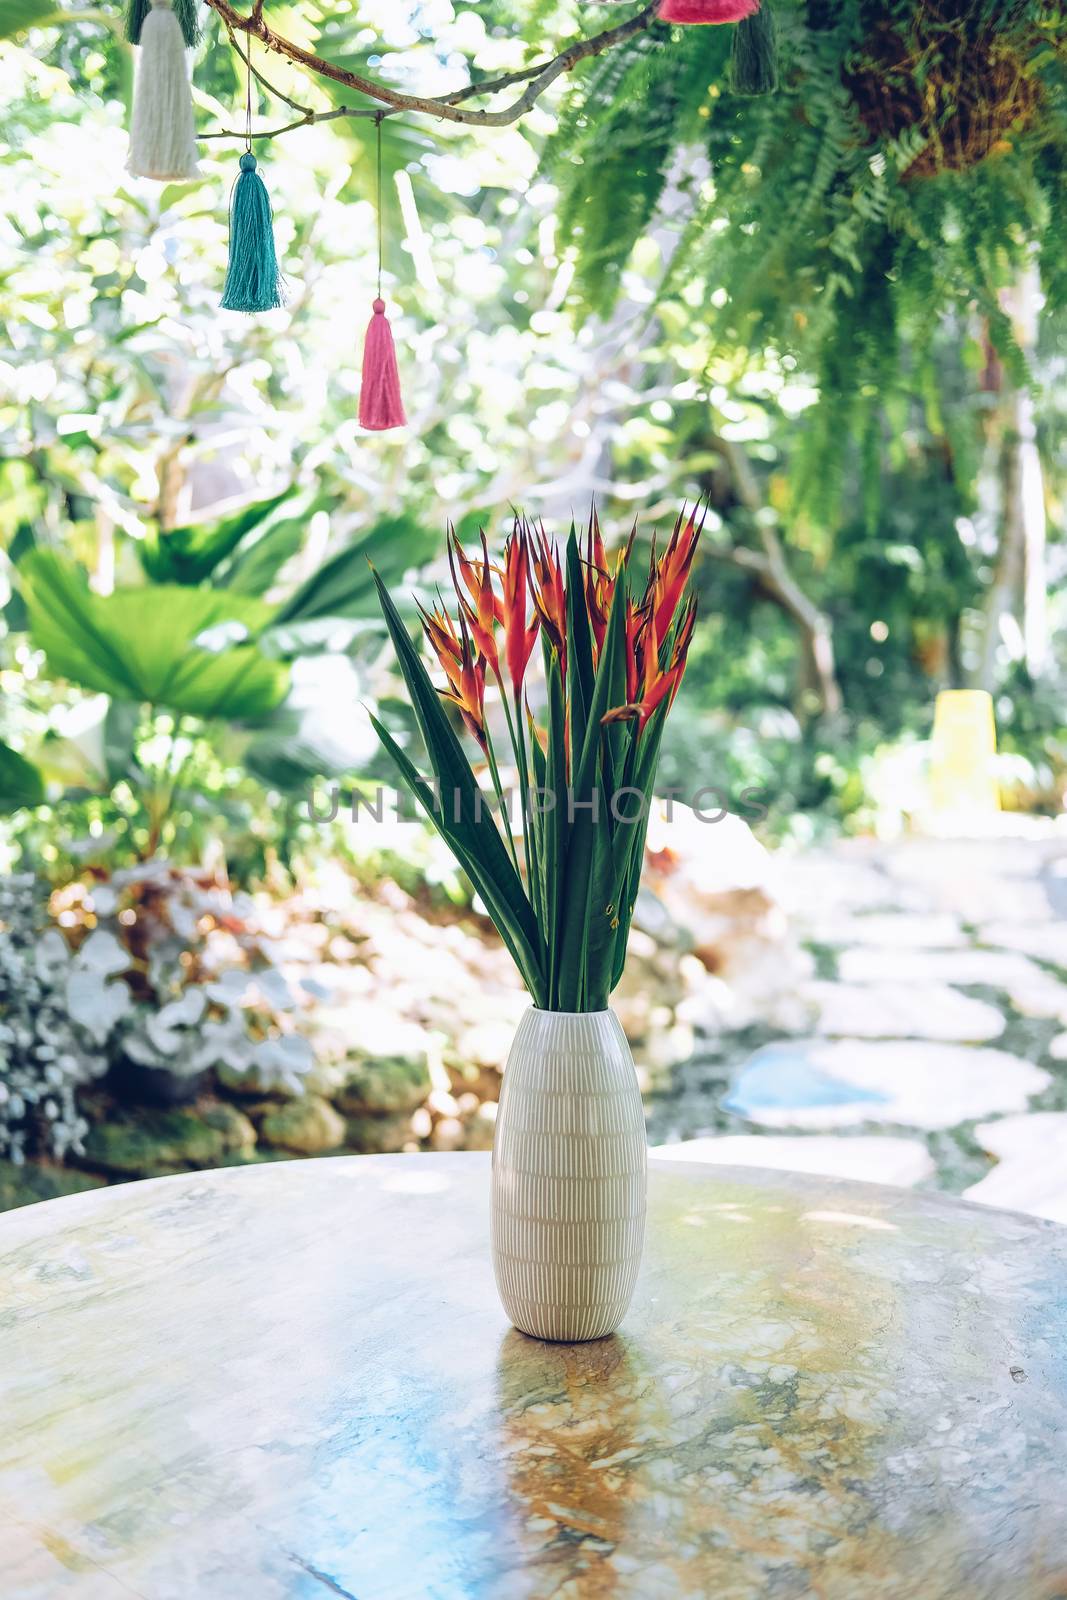 bird of paradise flower in vase for decoration in garden